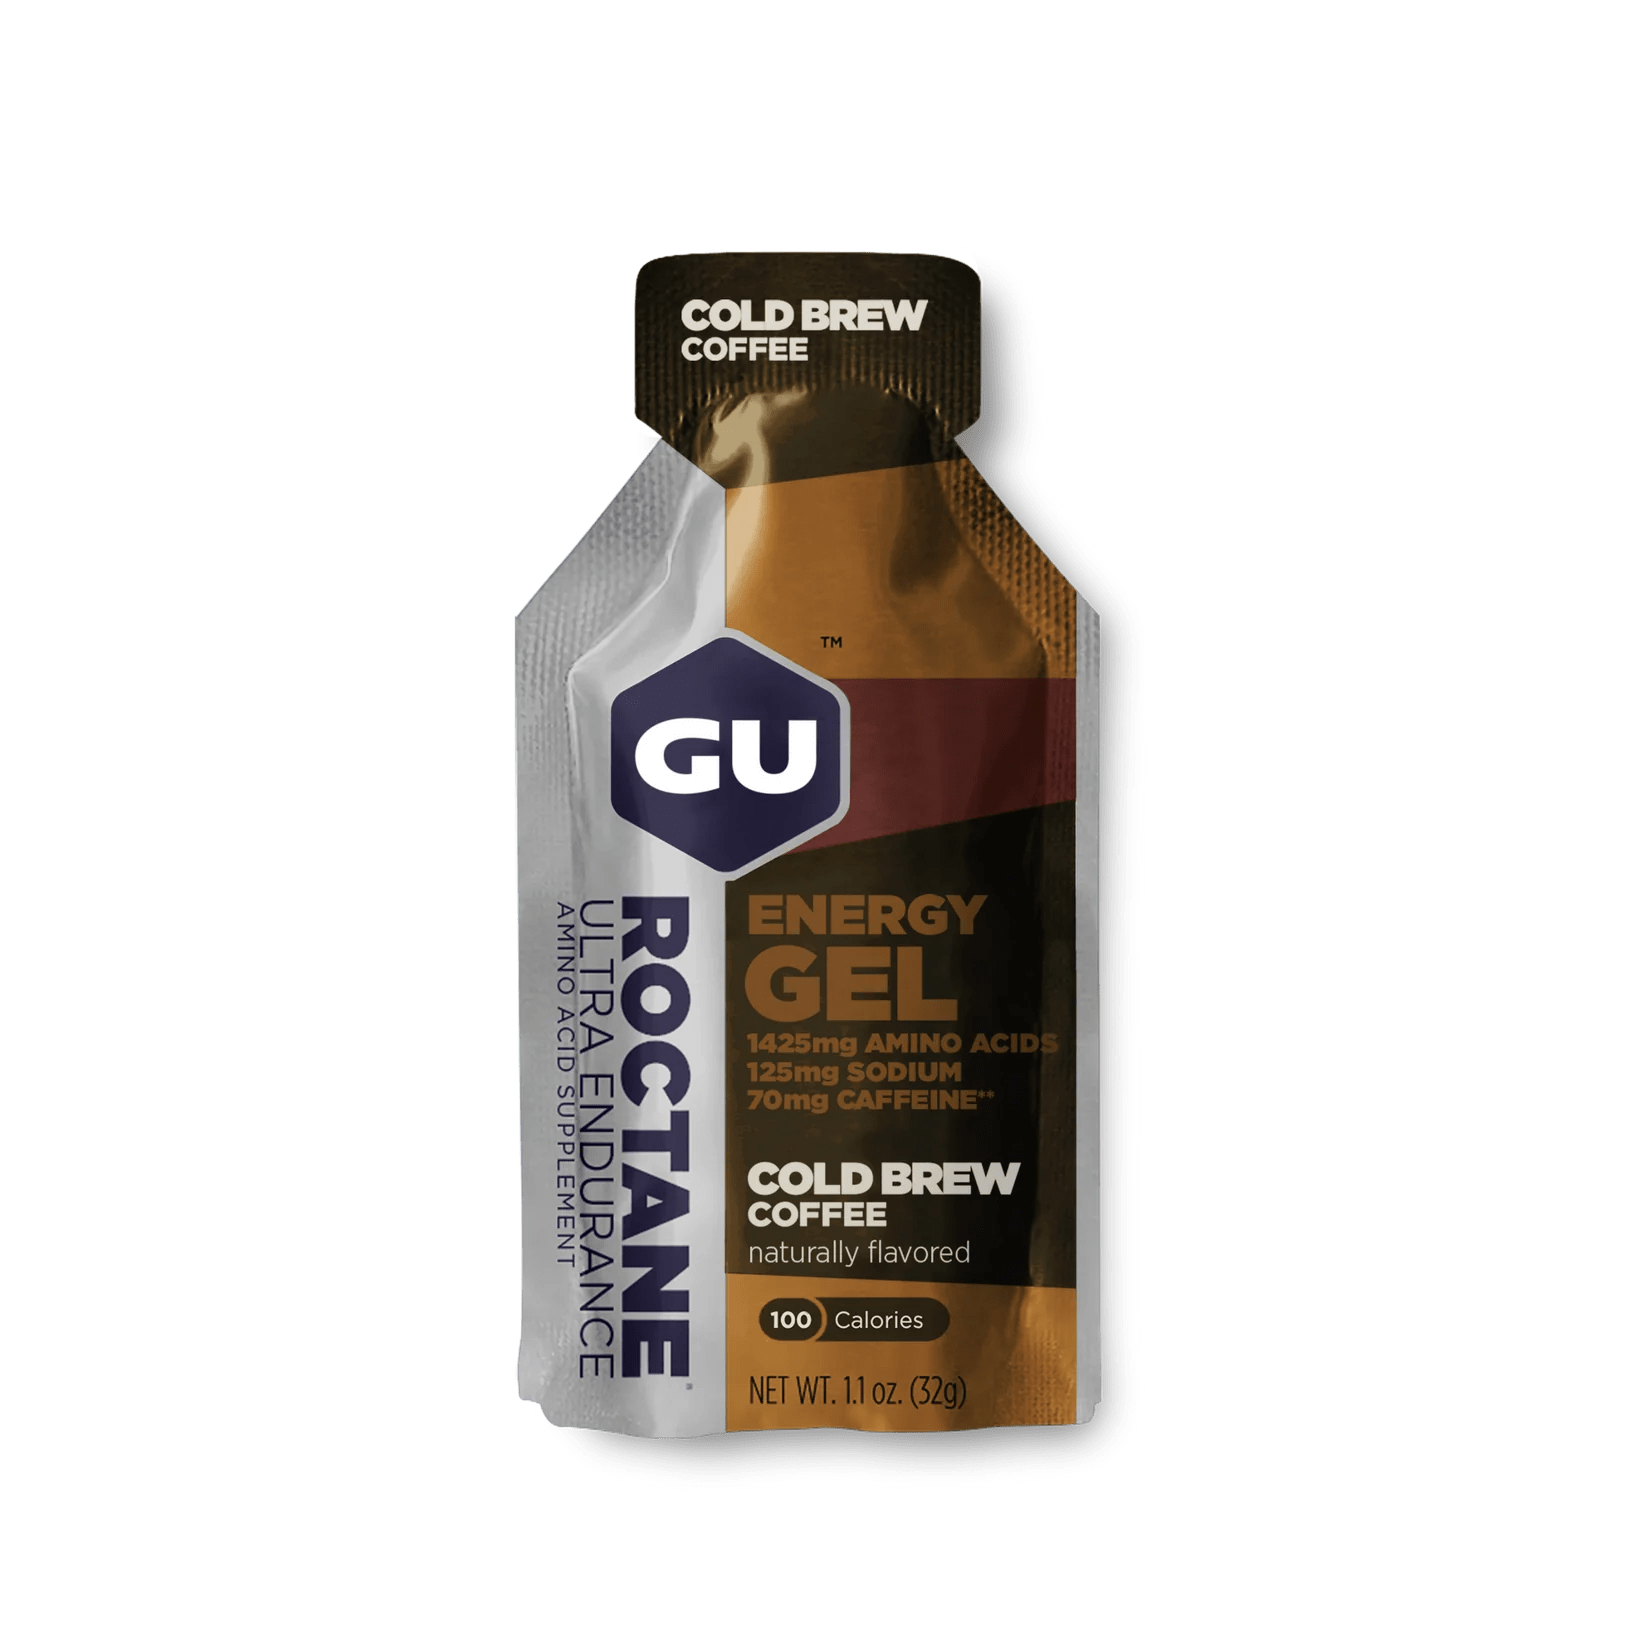 GU Gels Single Serve / Cold Brew Coffee (70mg caffeine) Roctane Energy Gel XMiles